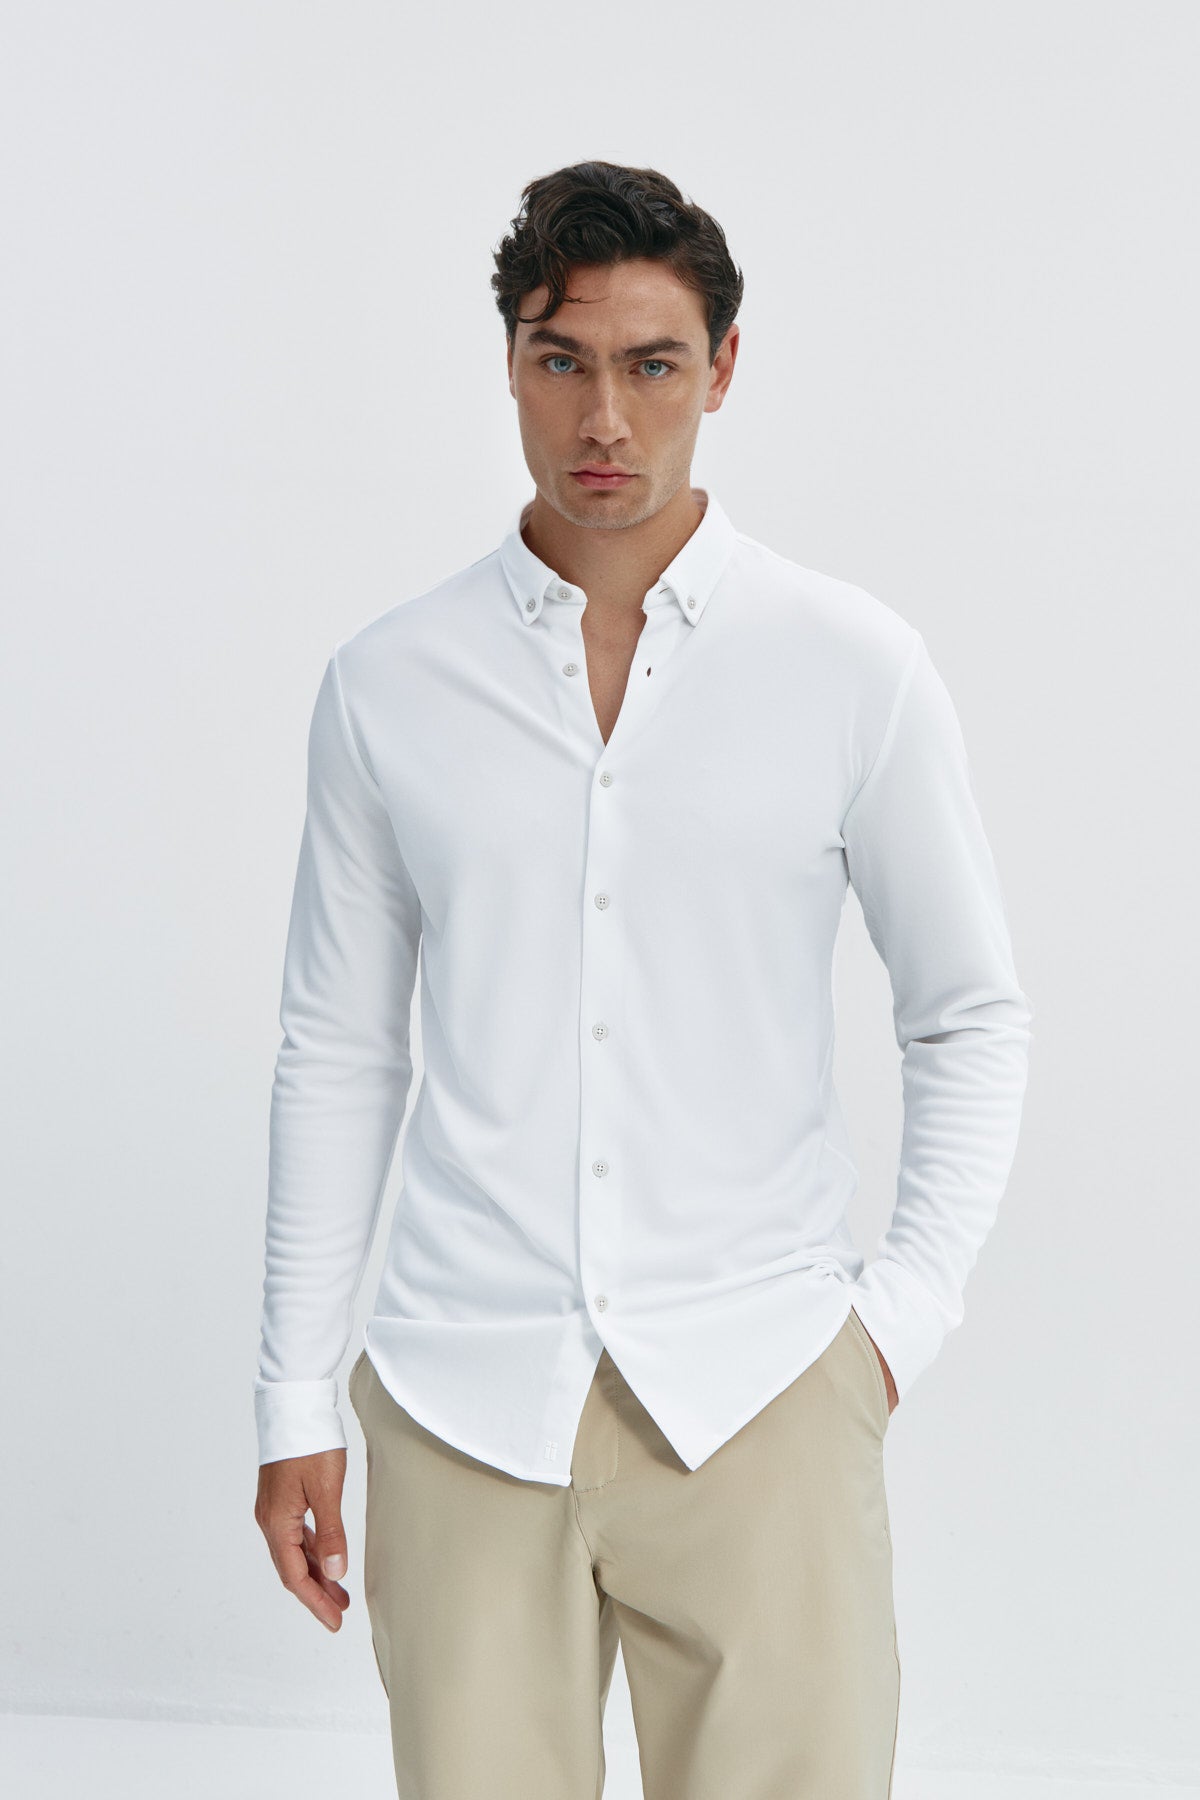 Camisa casual blanca para hombre sin arrugas ni manchas. Manga larga, antiarrugas y antimanchas. Foto frente